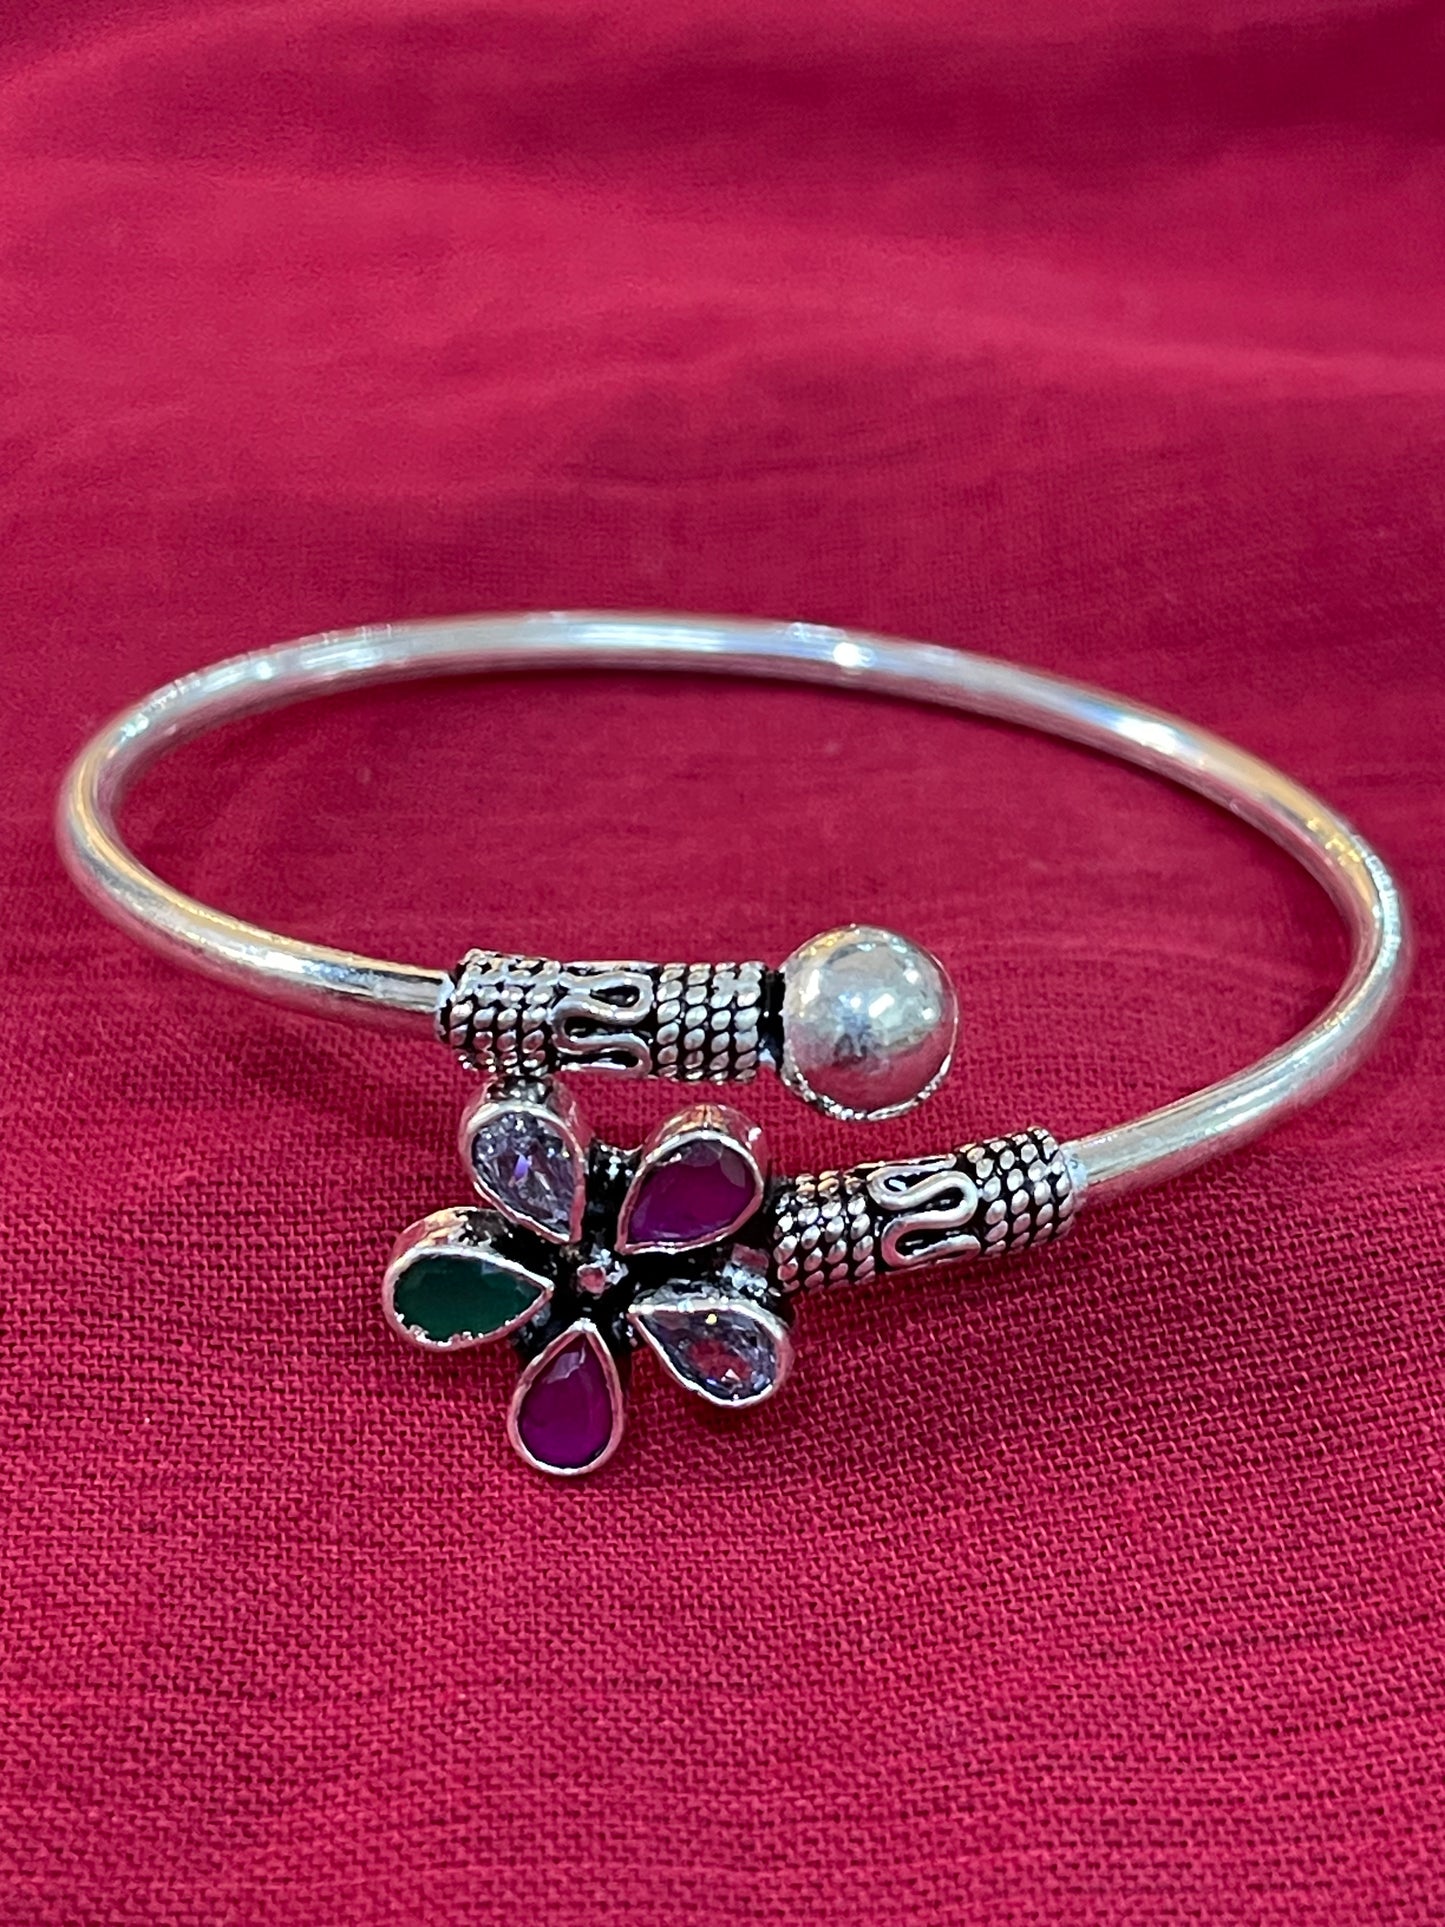 Multi colored stones in flower shape sterling silver adjustable size bracelet